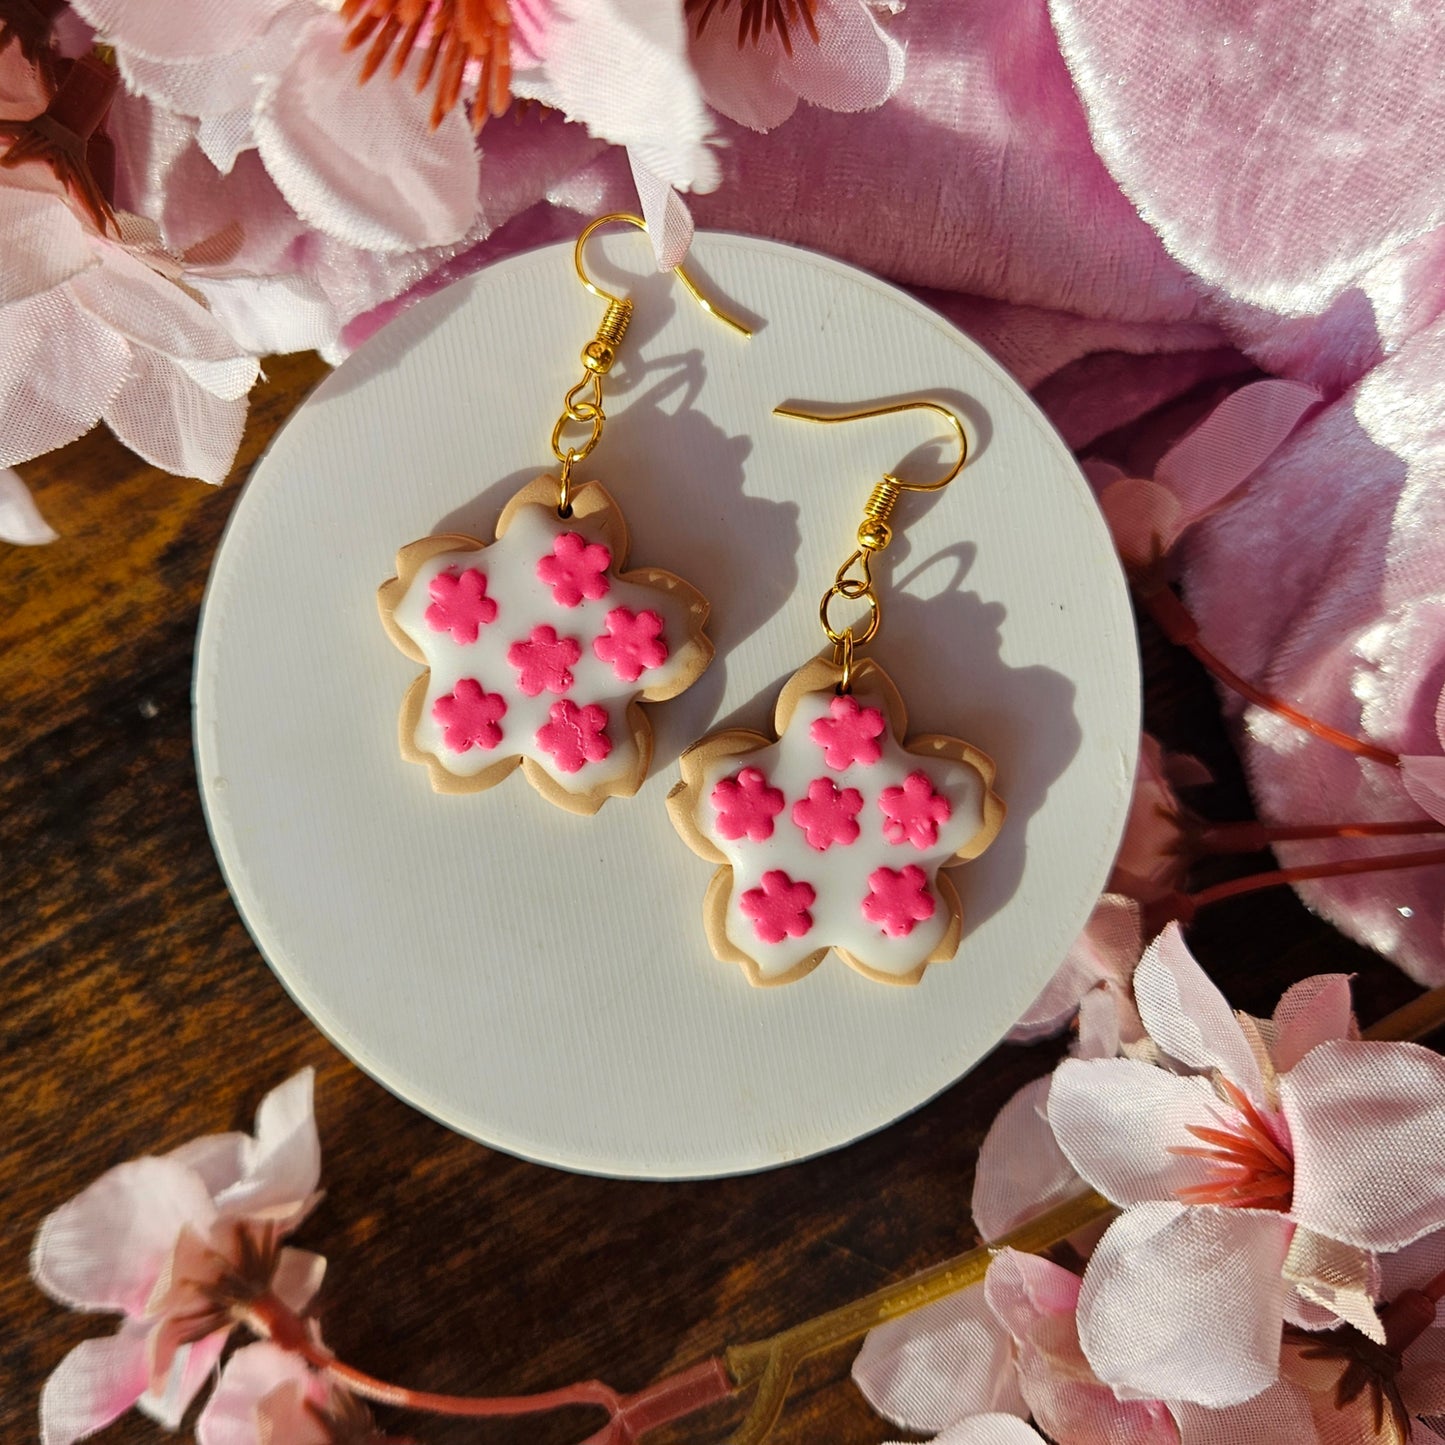 Sakura Cookies